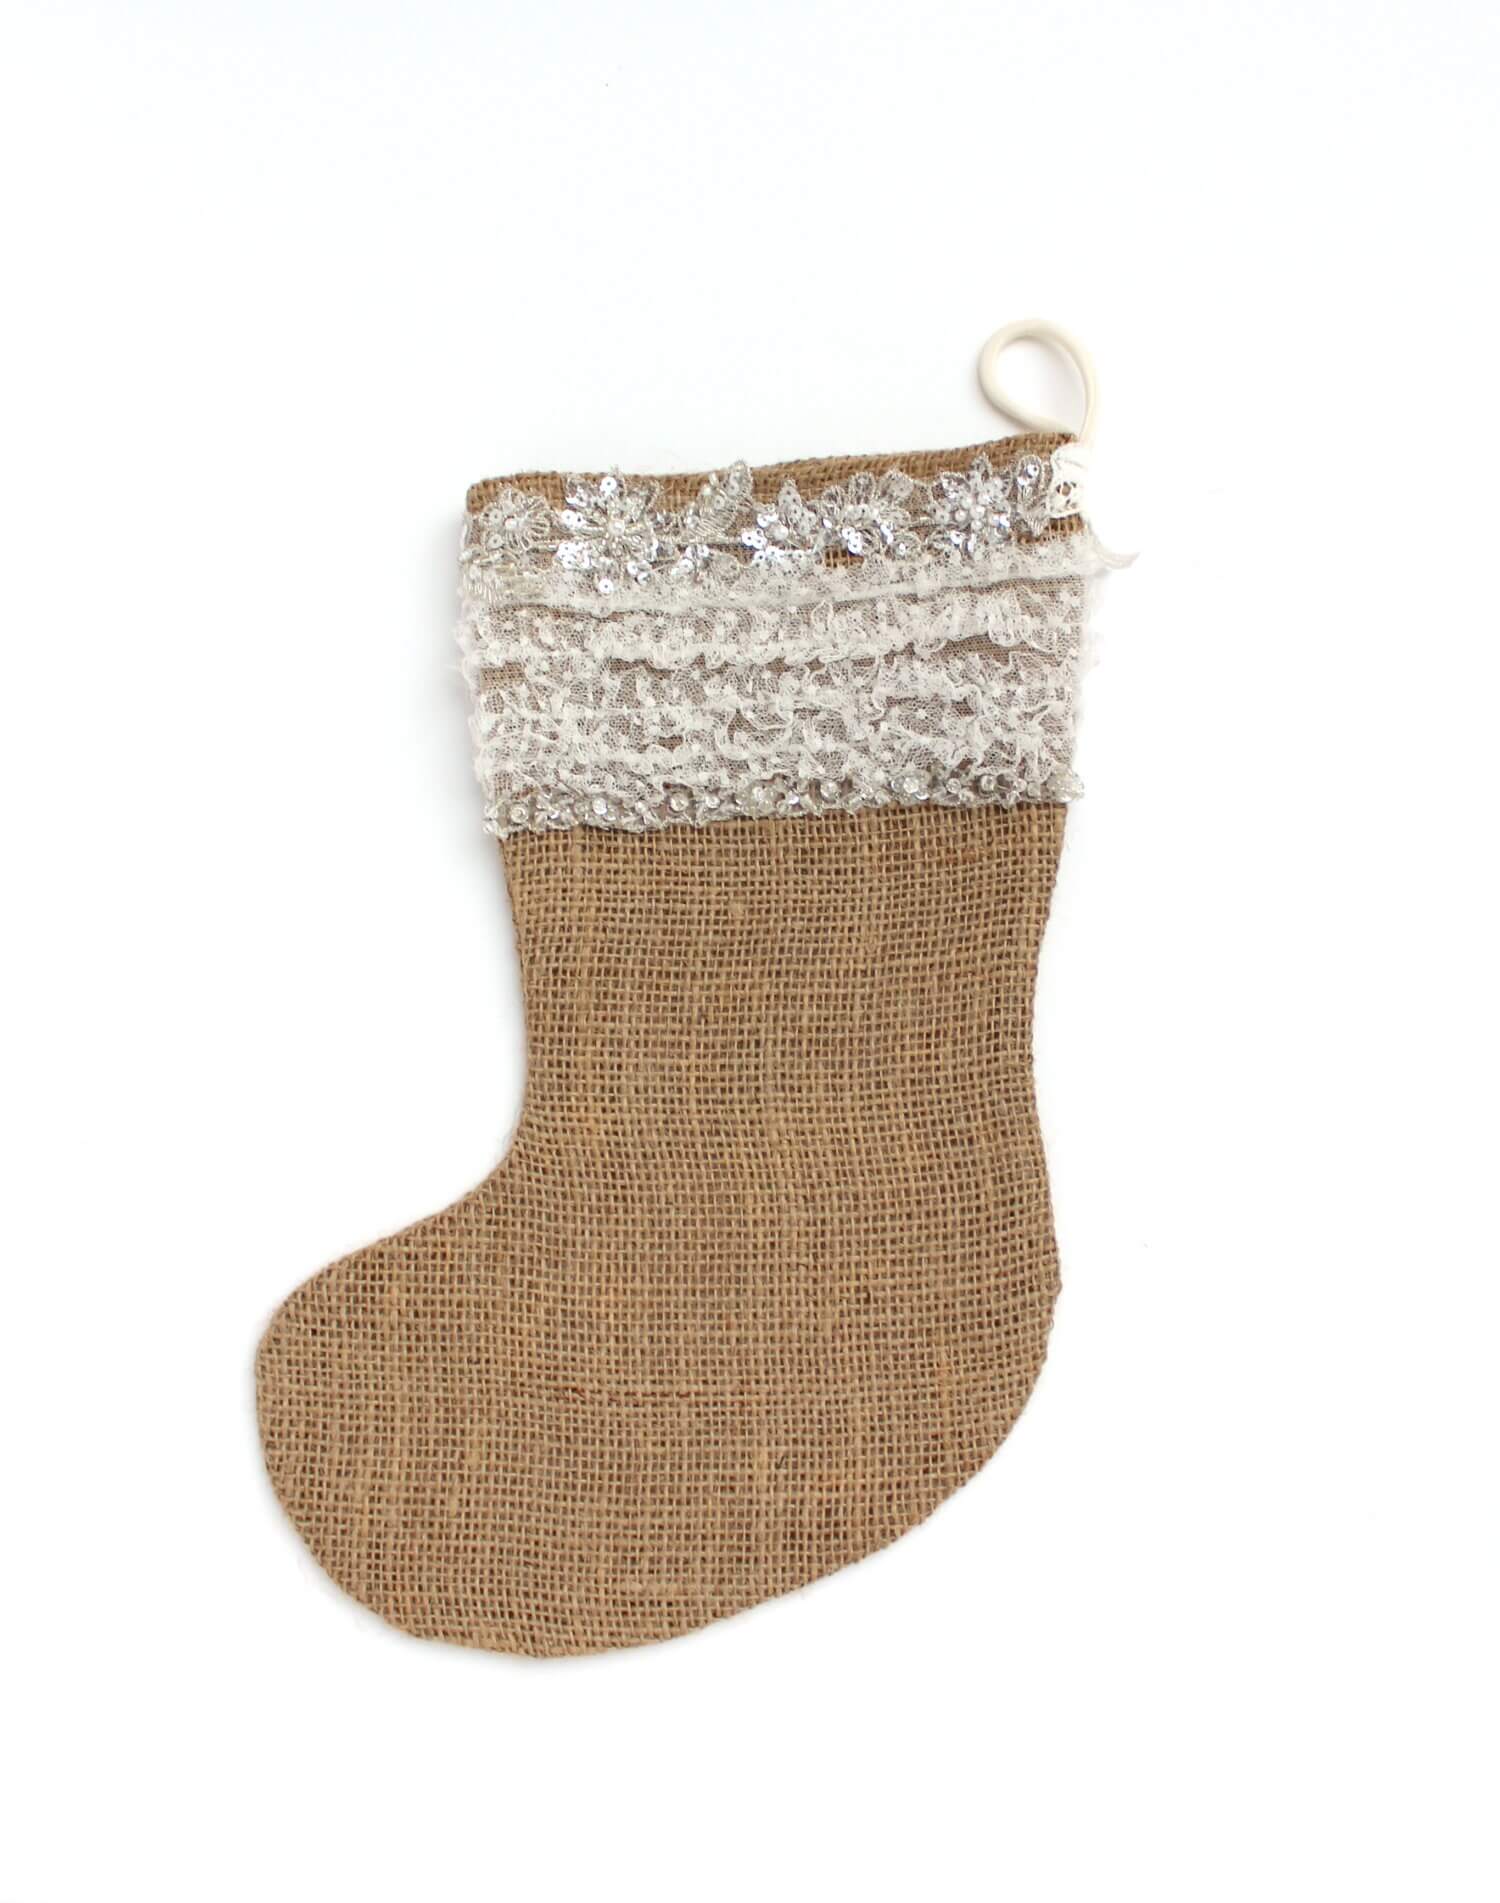 Hessian Christmas stocking